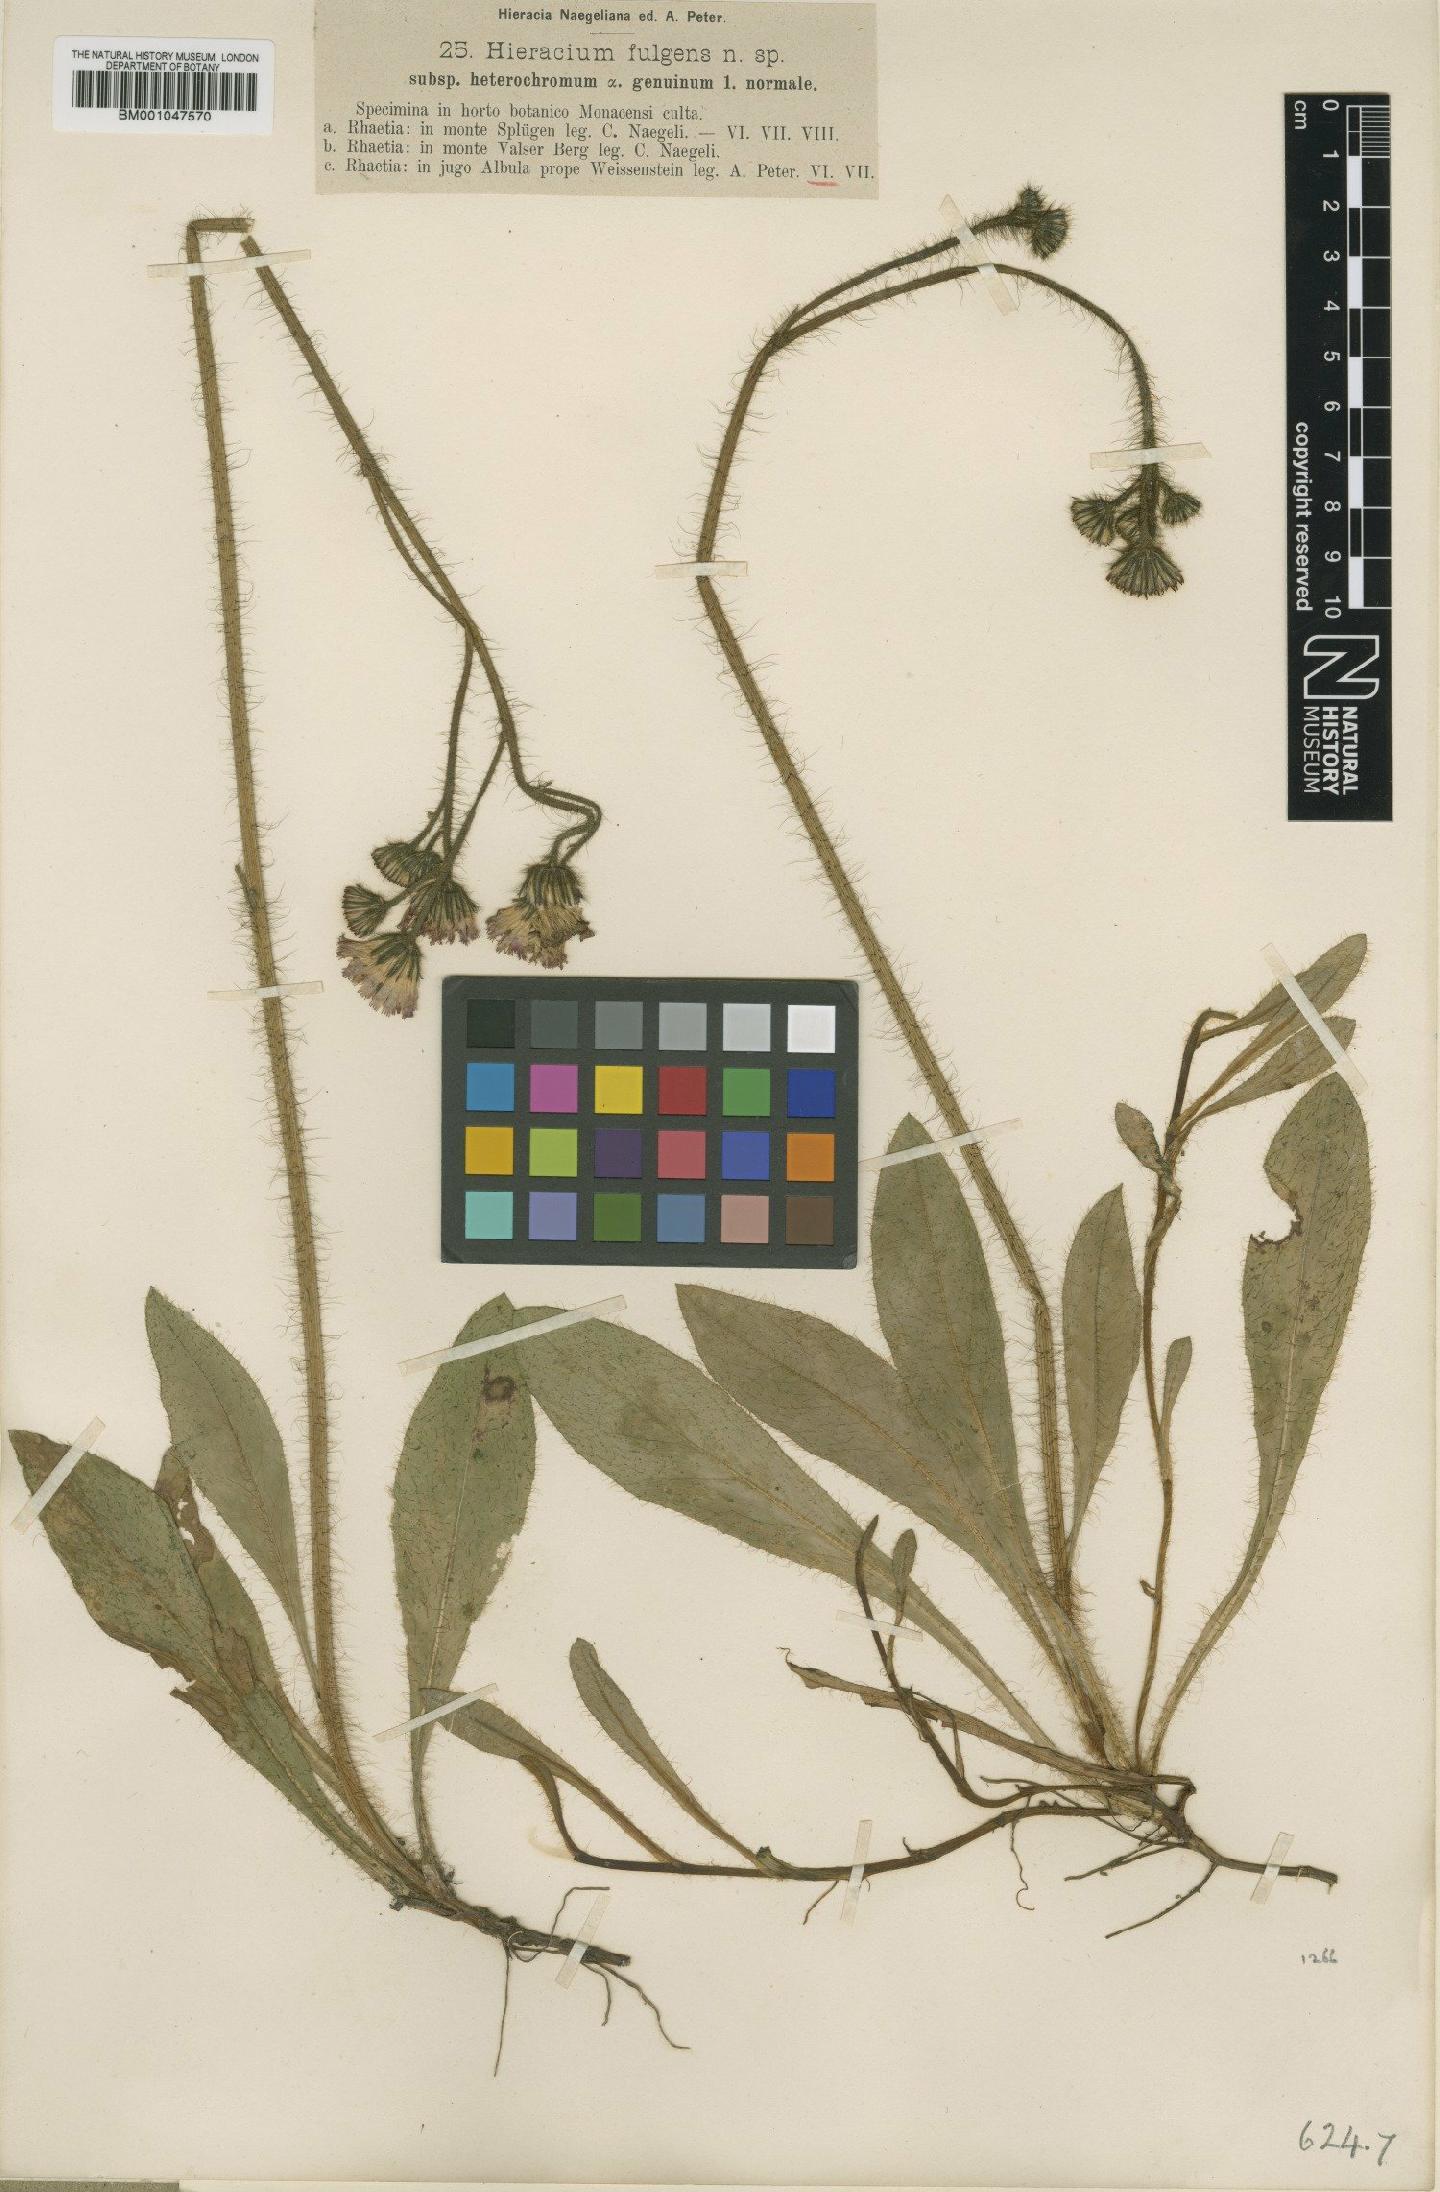 To NHMUK collection (Hieracium fulgens subsp. heterochromum Nägeli & Peter; NHMUK:ecatalogue:2777144)